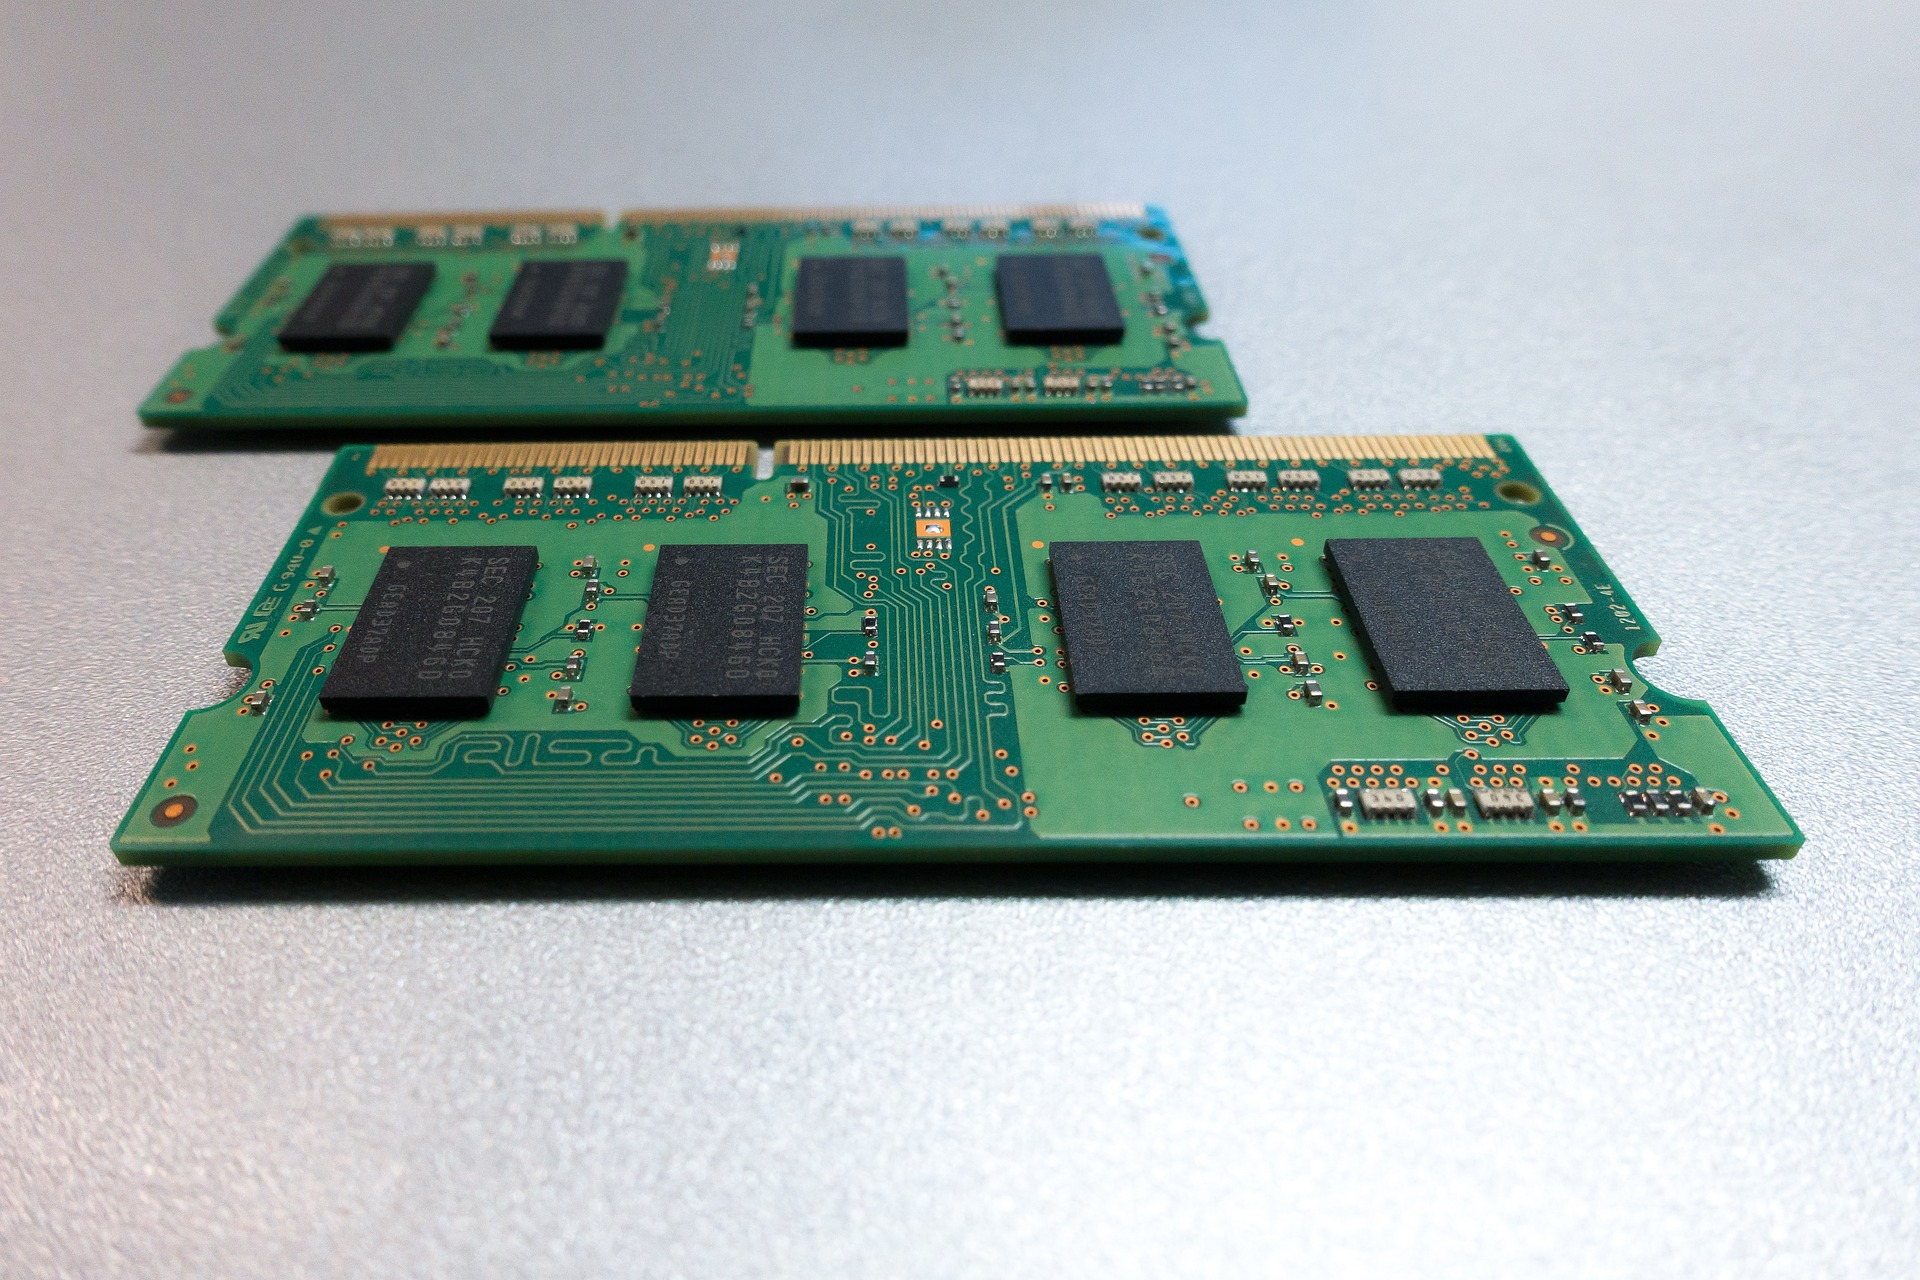 DDR5-SDRAM